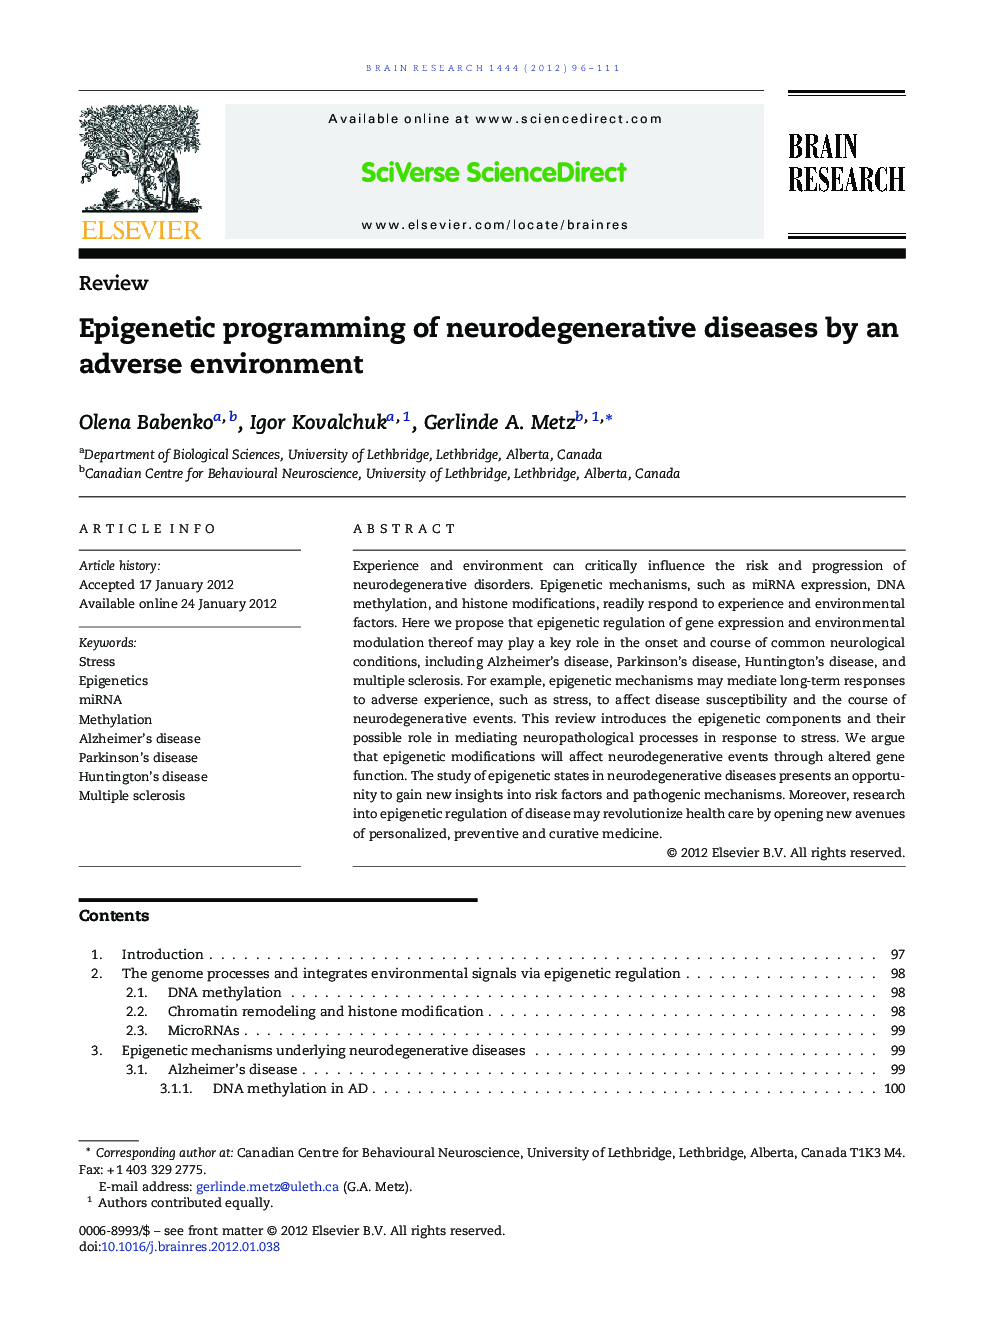 Epigenetic programming of neurodegenerative diseases by an adverse environment